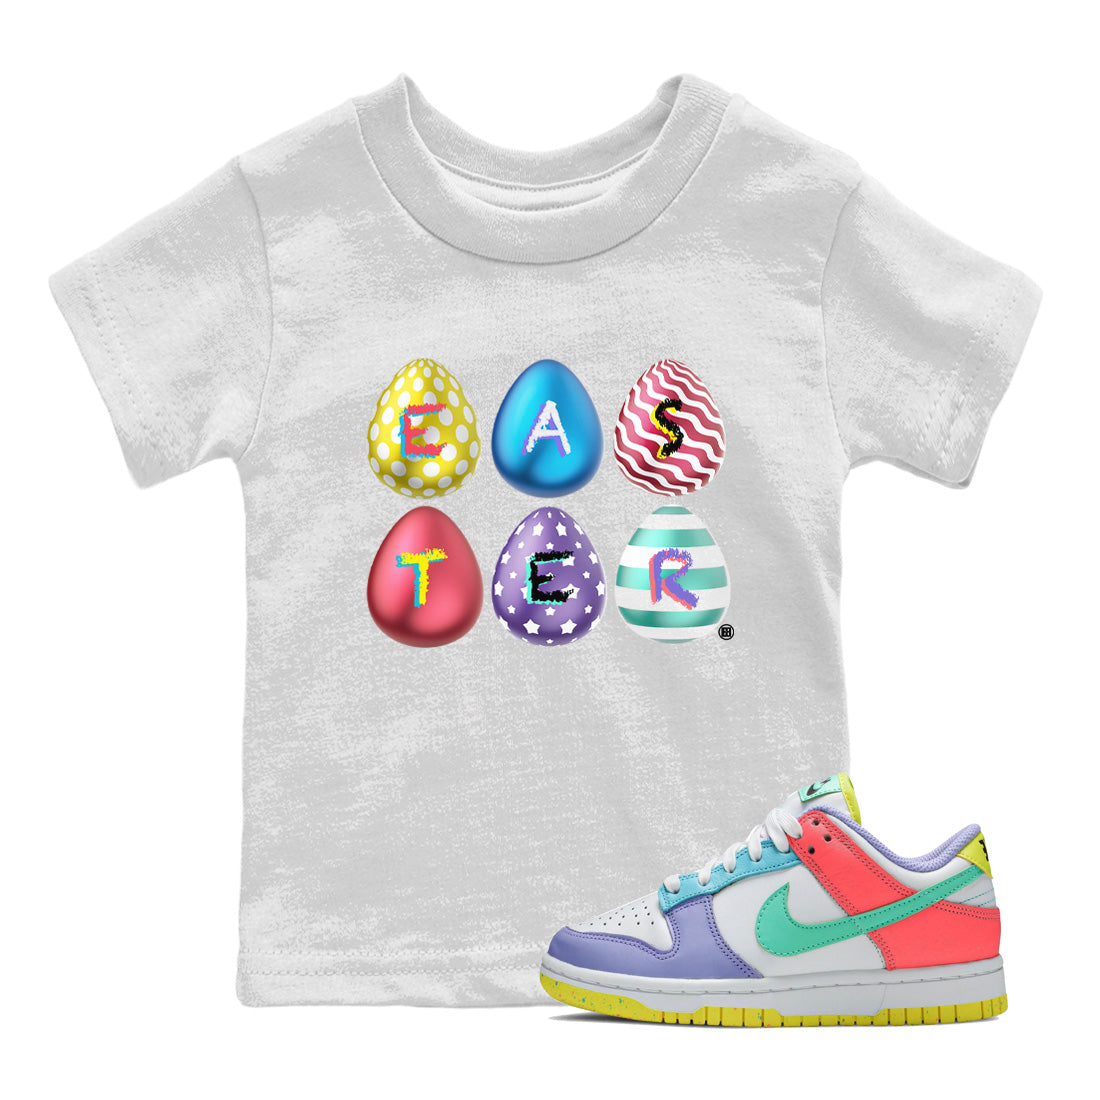 Dunk Easter Candy Sneaker Tees Drip Gear Zone Colorful Easter Sneaker Tees Holiday Easter T-Shirt Shirt Kids Shirts White 1